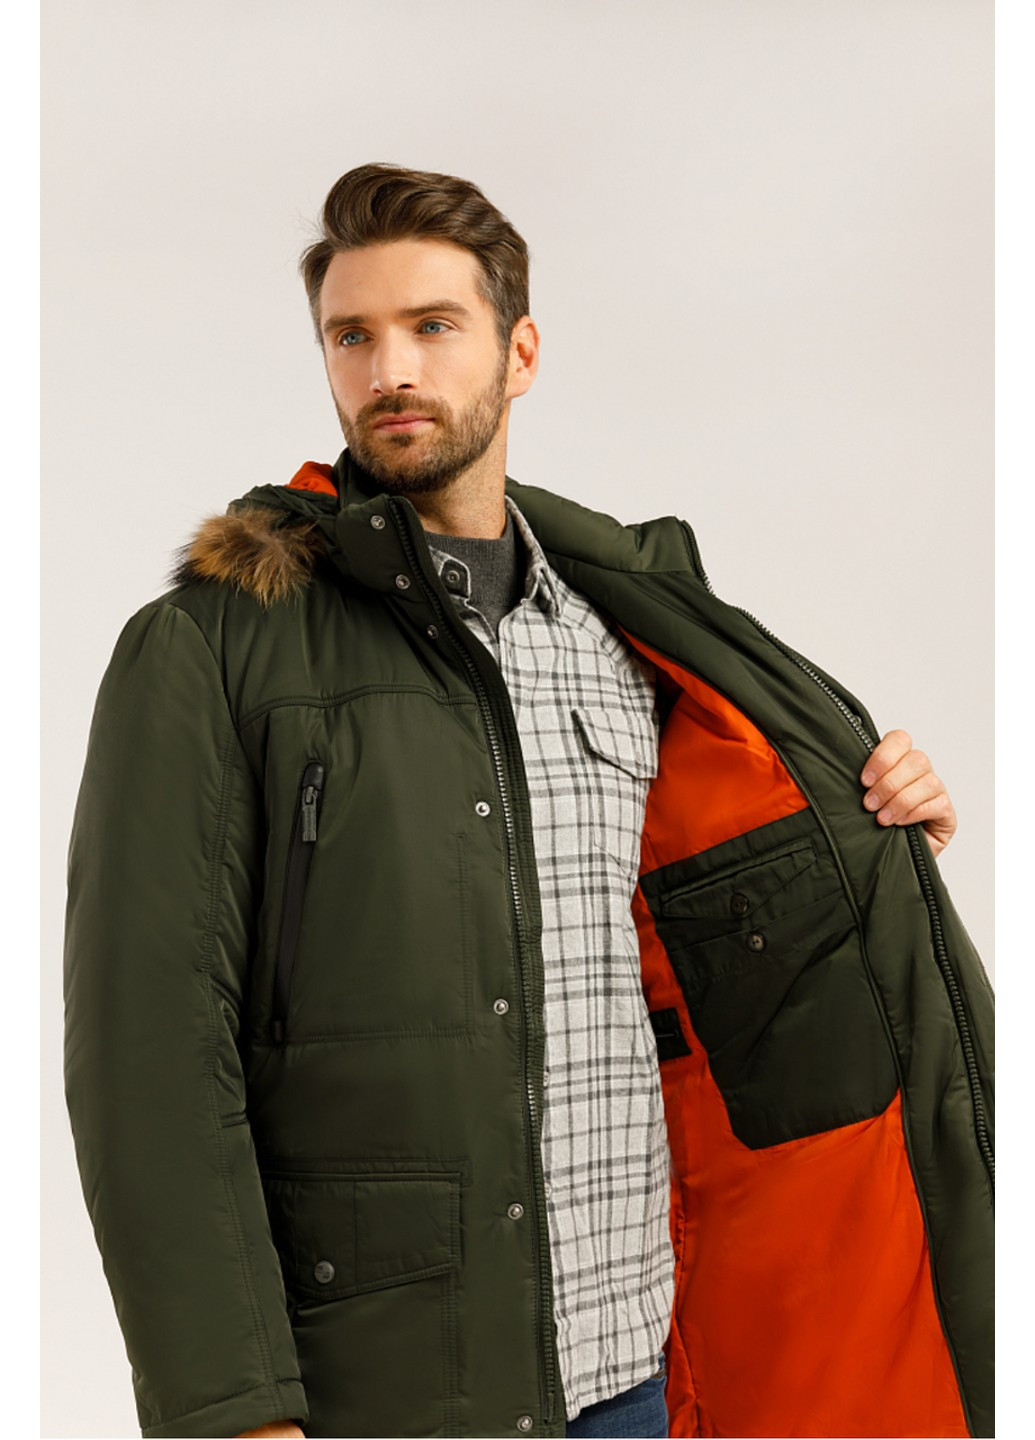 Зеленая зимняя зимняя куртка w19-22012-507 Finn Flare